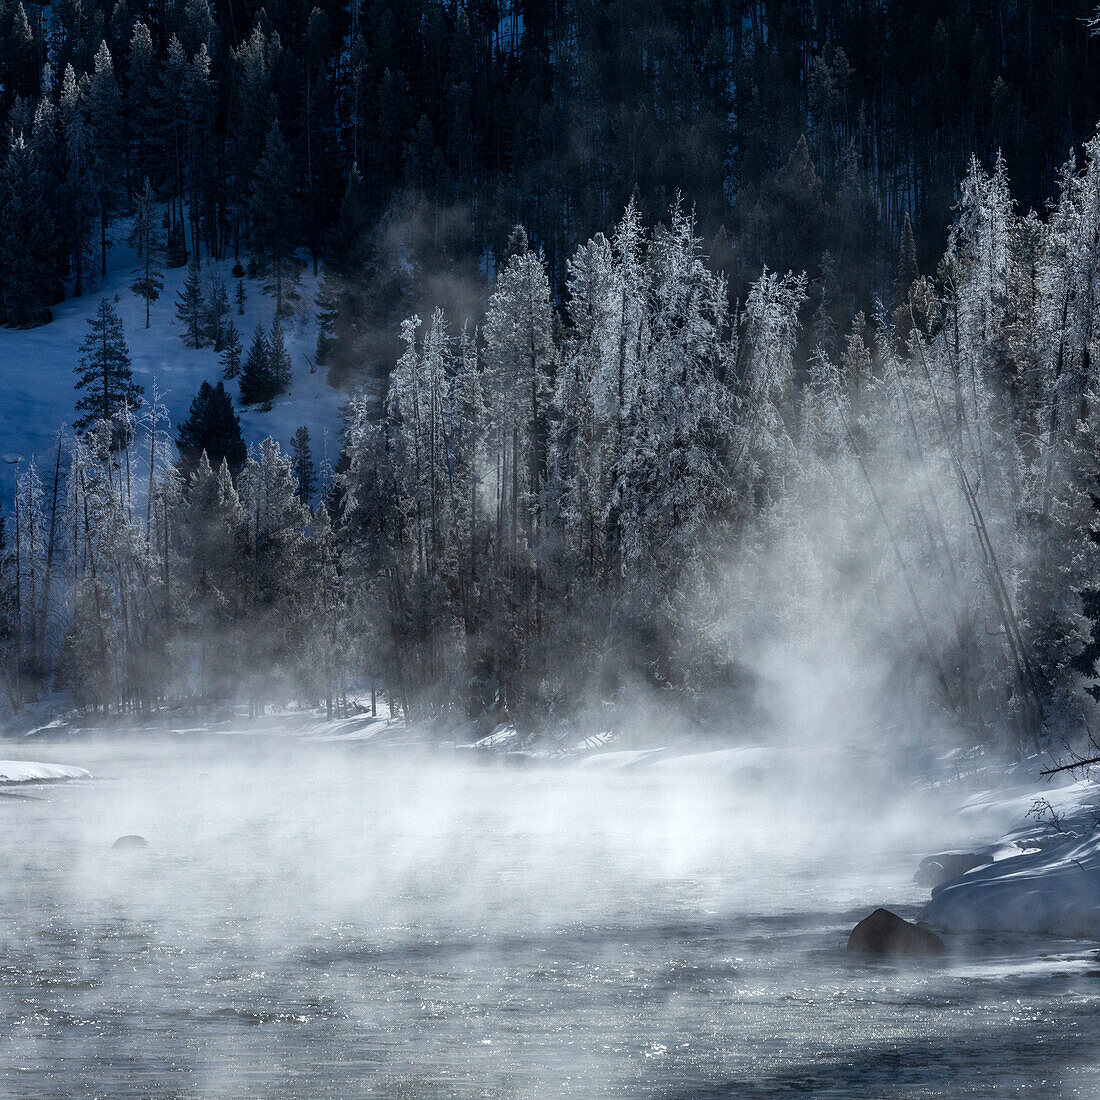 USA, Idaho, Stanley, Salmon River im Winter